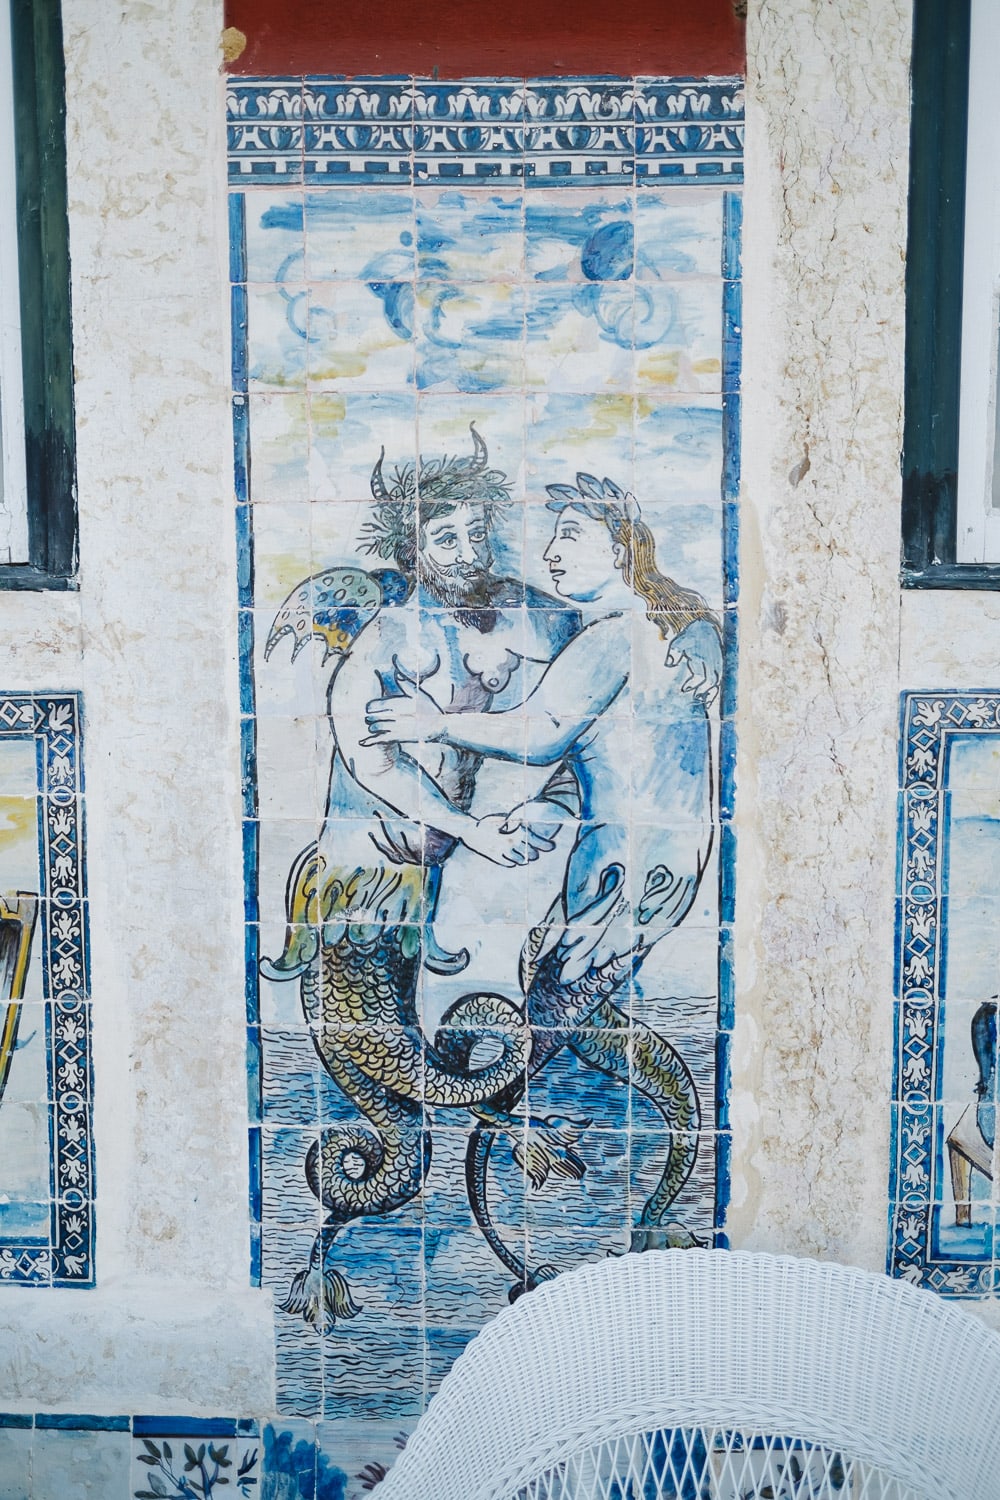 poseidon and mermaid tiles in Lisbon old palace